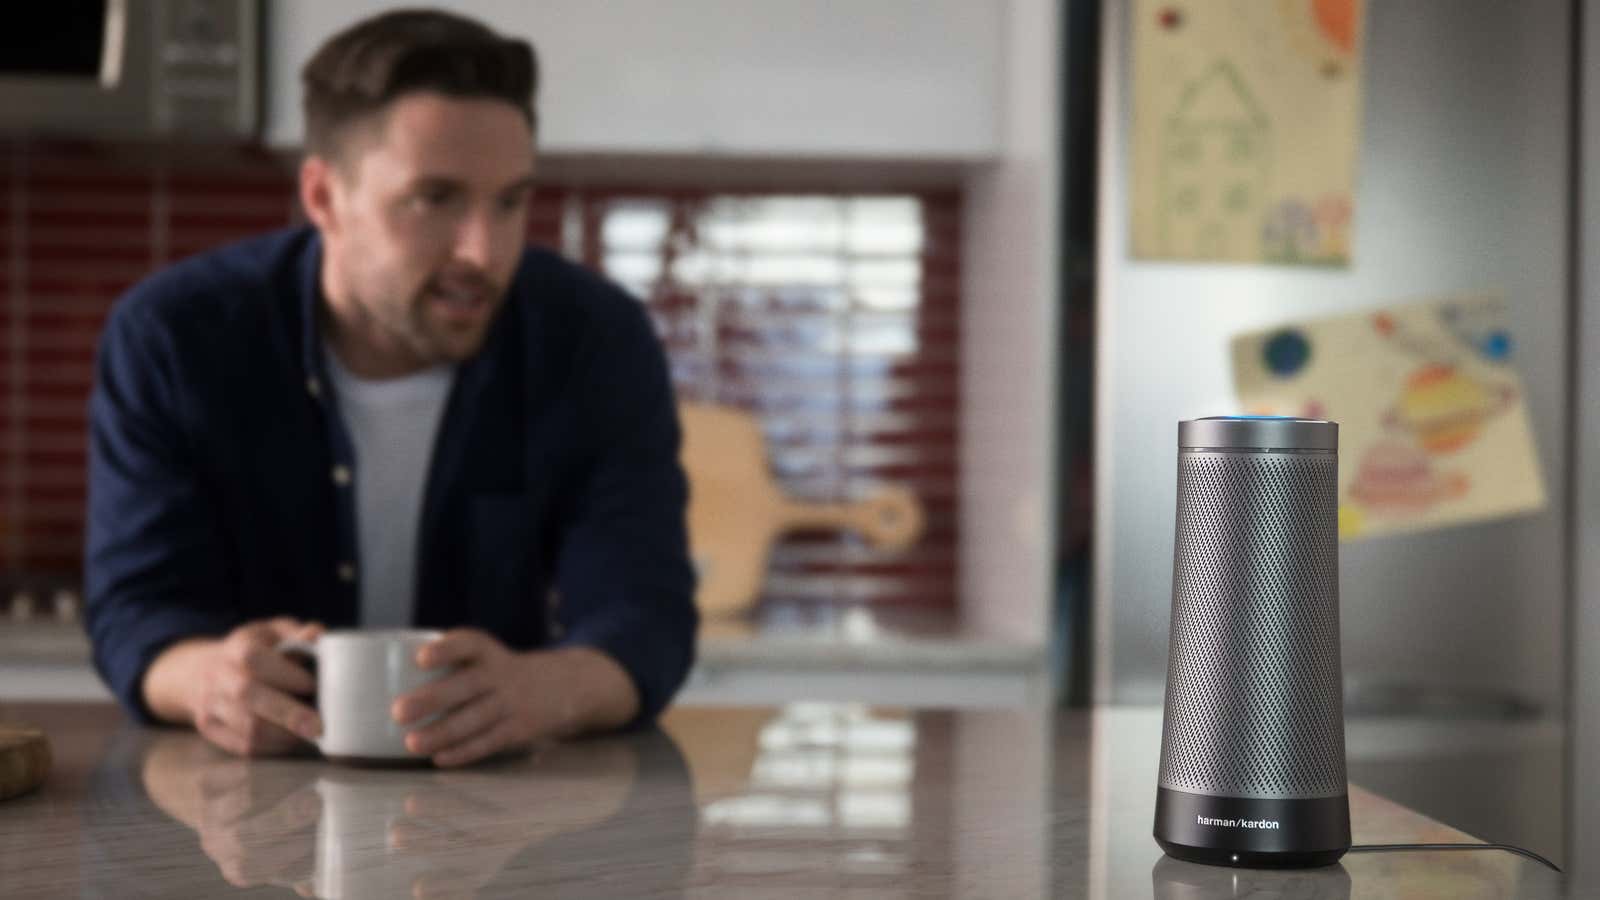 The Harman Kardon speaker, with Cortana living inside.